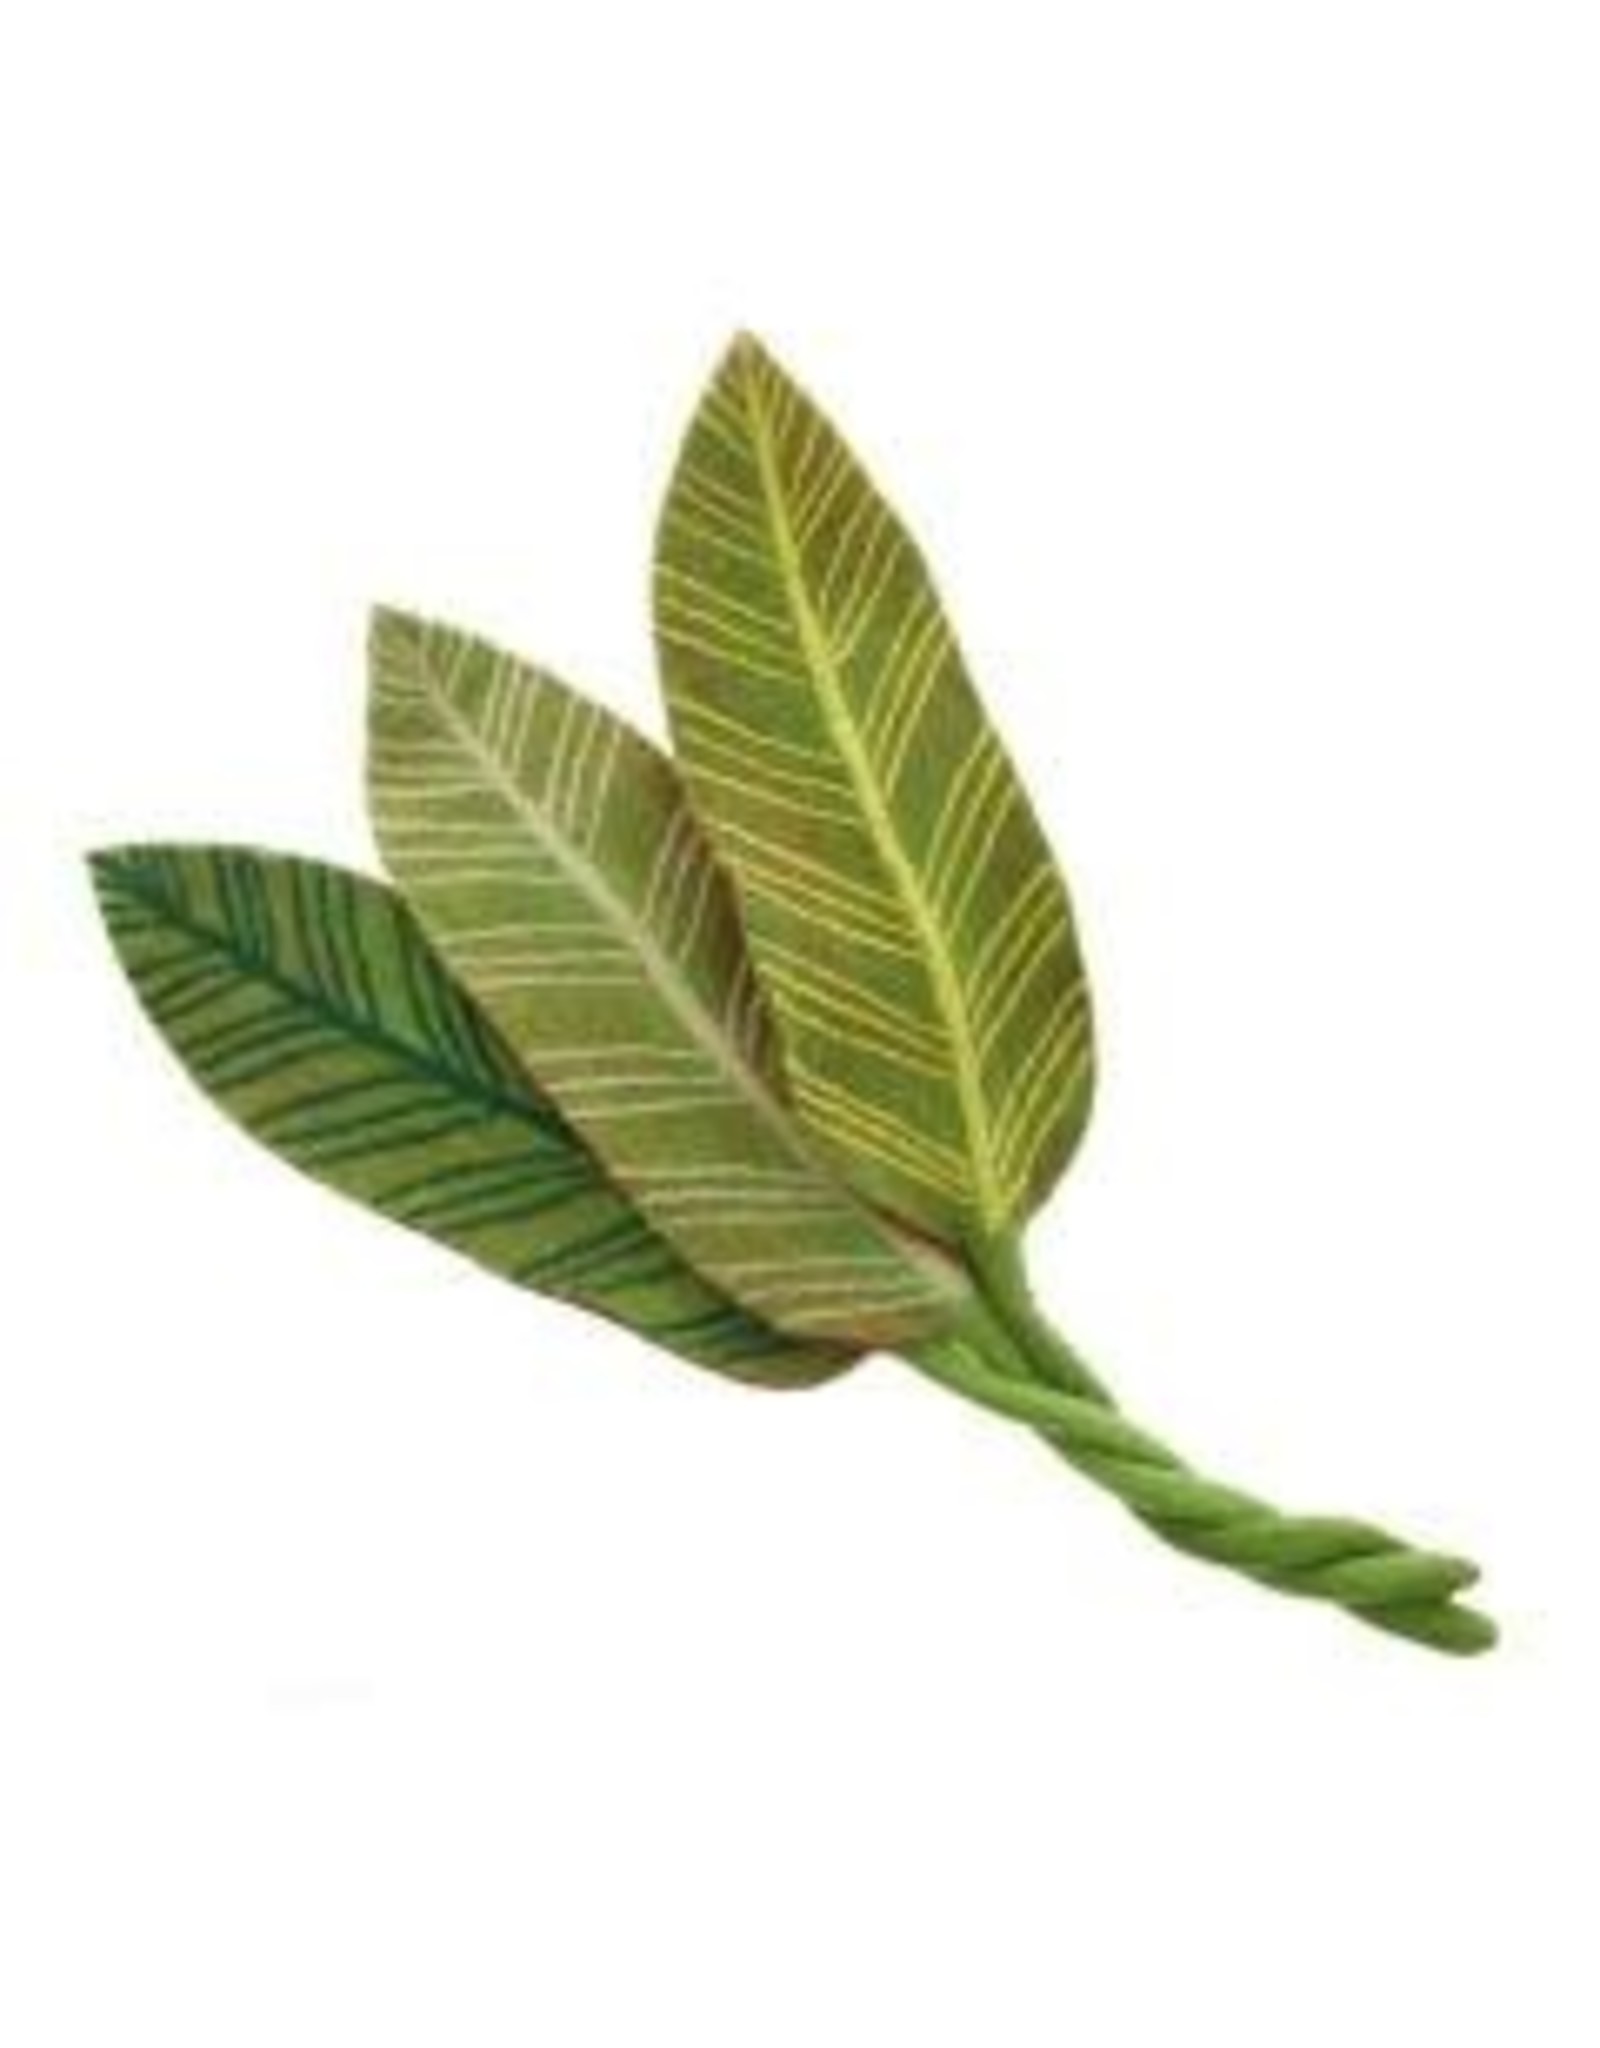 Trade roots Felt Calathea Leaf White Veins, Nepal